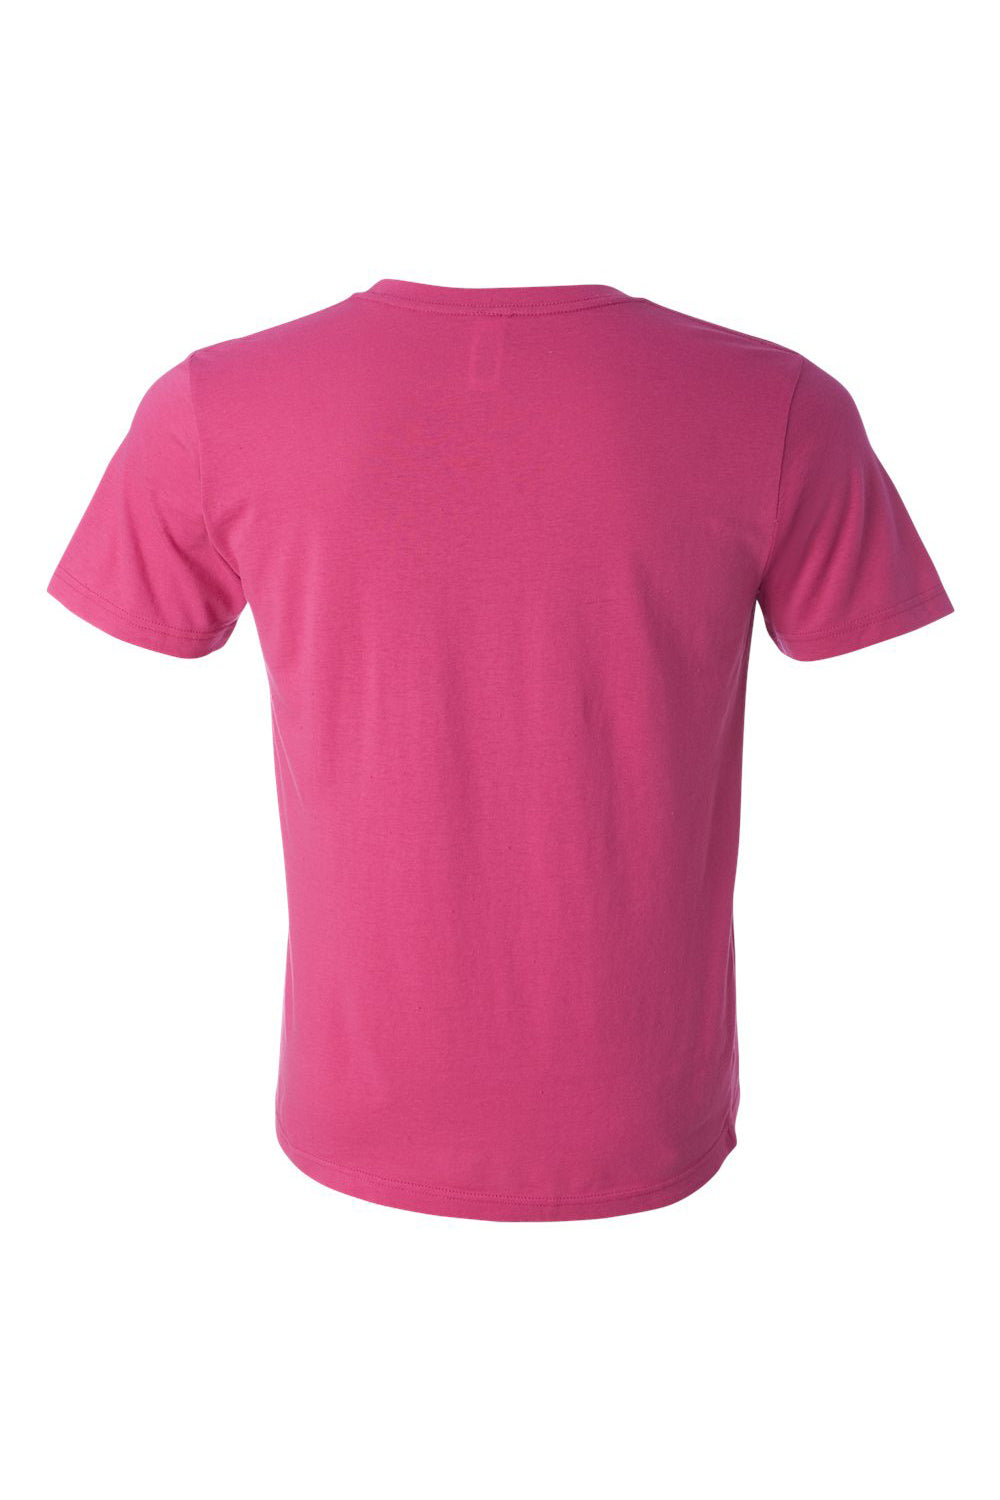 Bella + Canvas BC3650/3650 Mens Short Sleeve Crewneck T-Shirt Berry Pink Flat Back